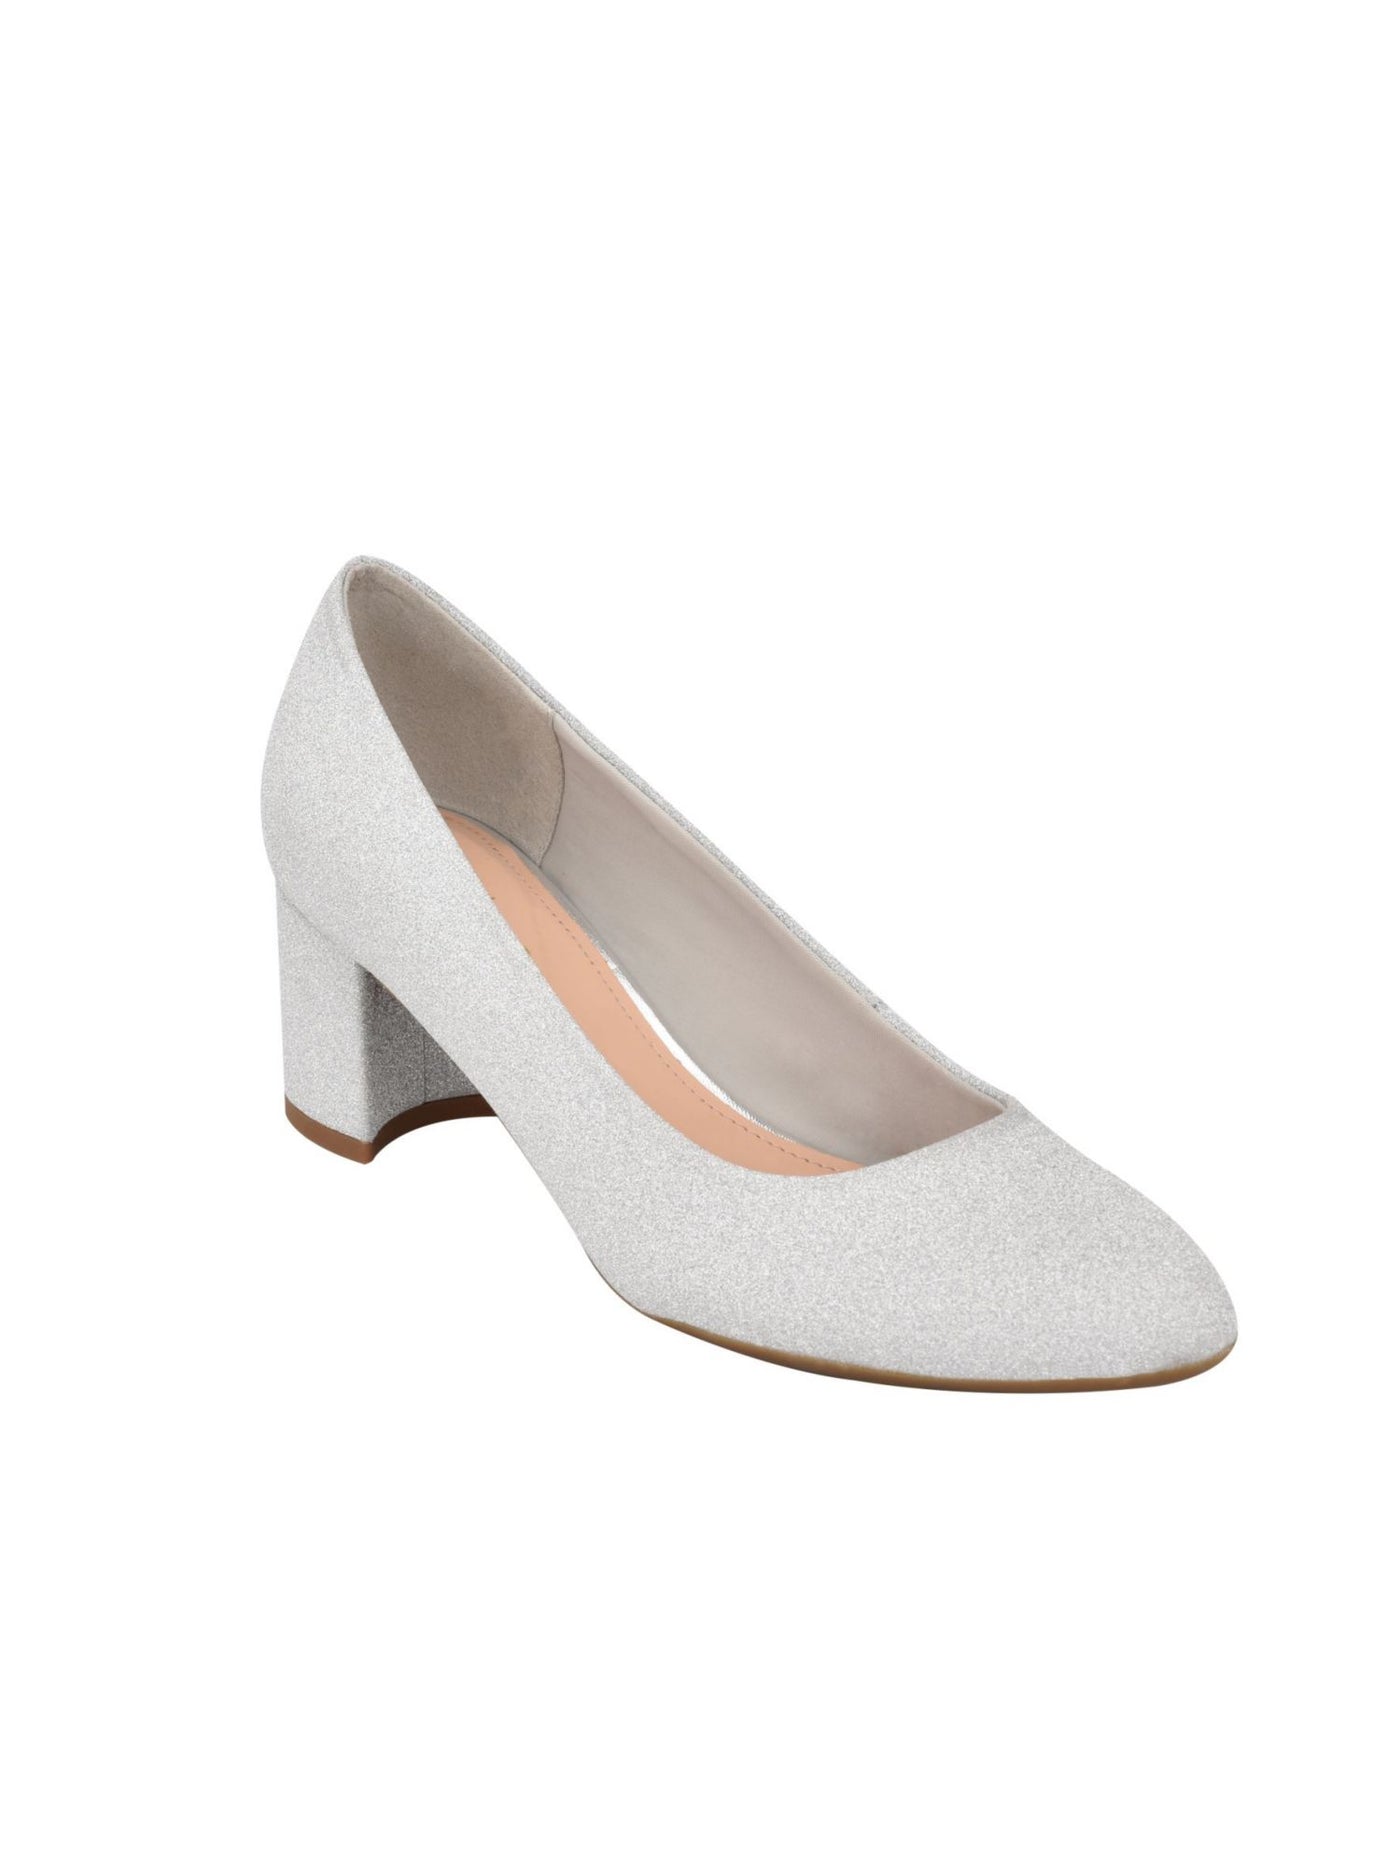 EVOLVE Womens Silver Glitter Padded Robin3 Almond Toe Block Heel Slip On Pumps Shoes 9 M